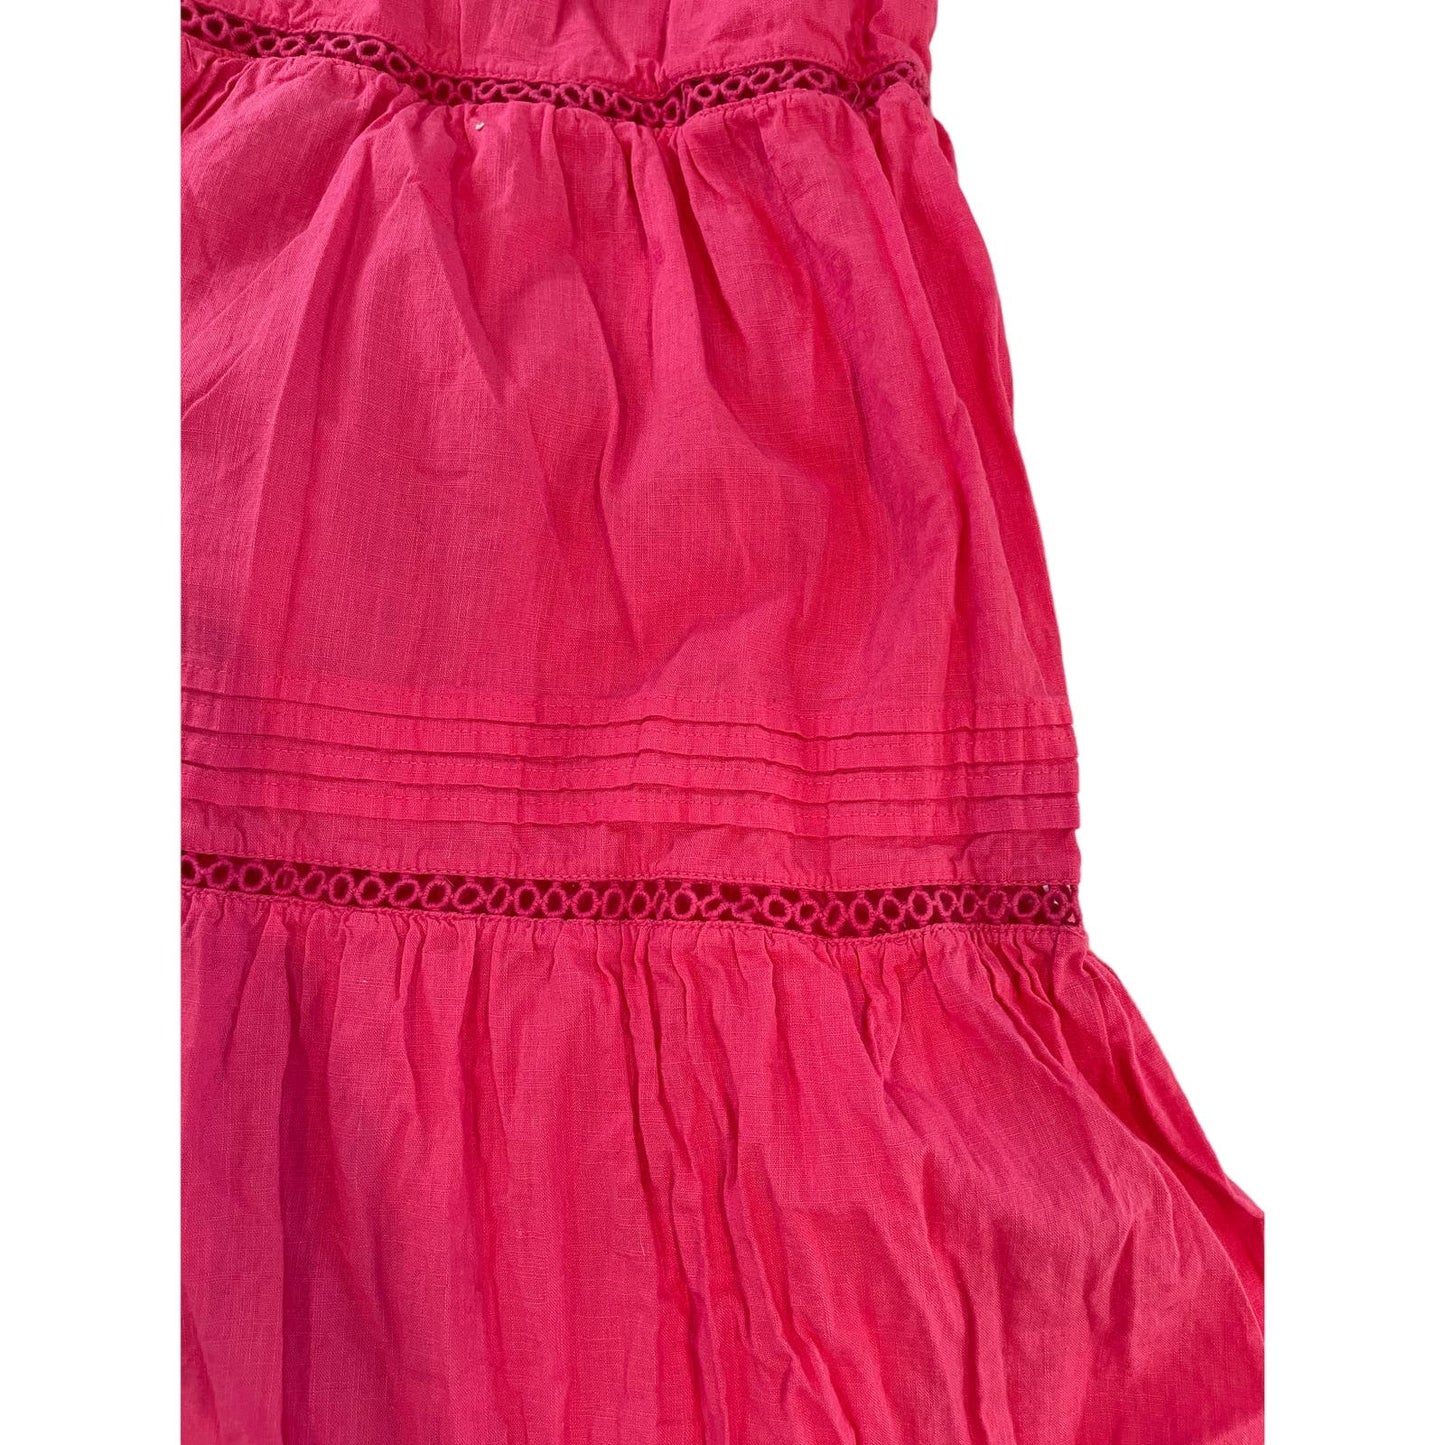 H&M Size 12 Hot Pink Women's Spaghetti Strap Long Maxi Sun Dress